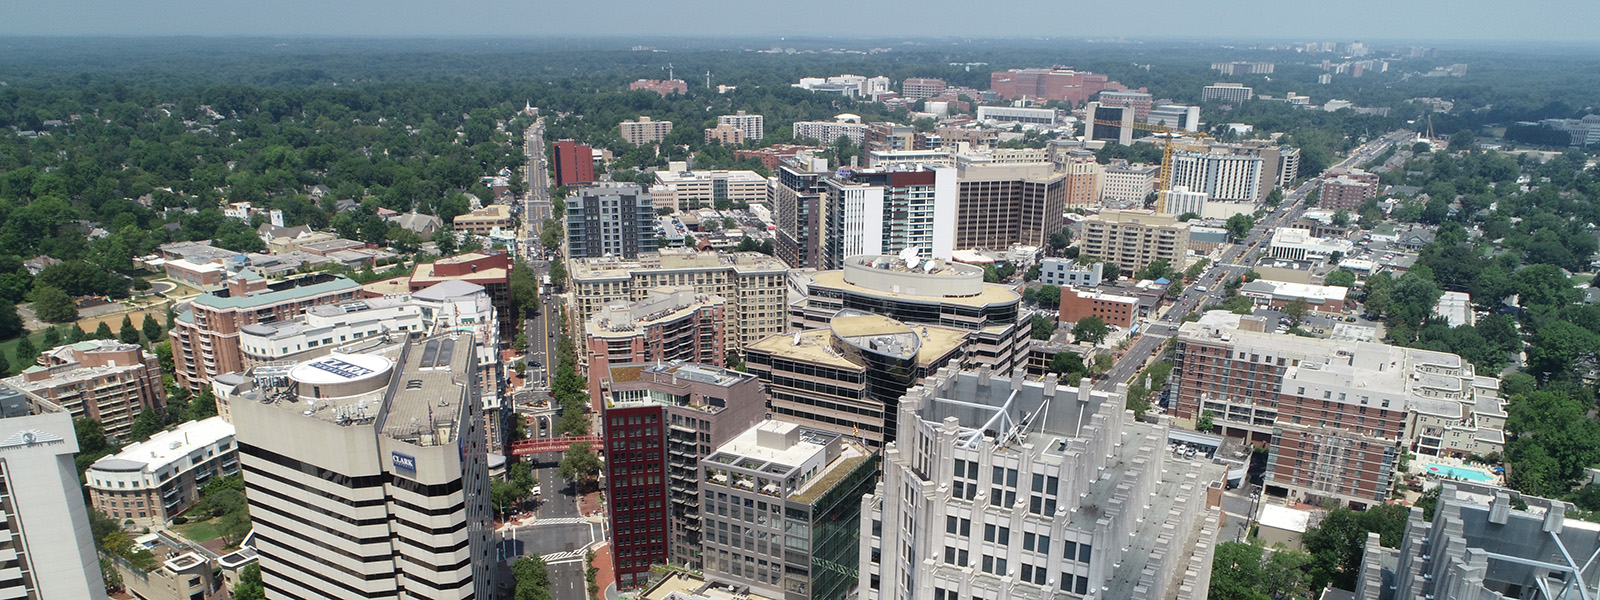 Aerial photo of Bethesda (urban center, tall buildings)